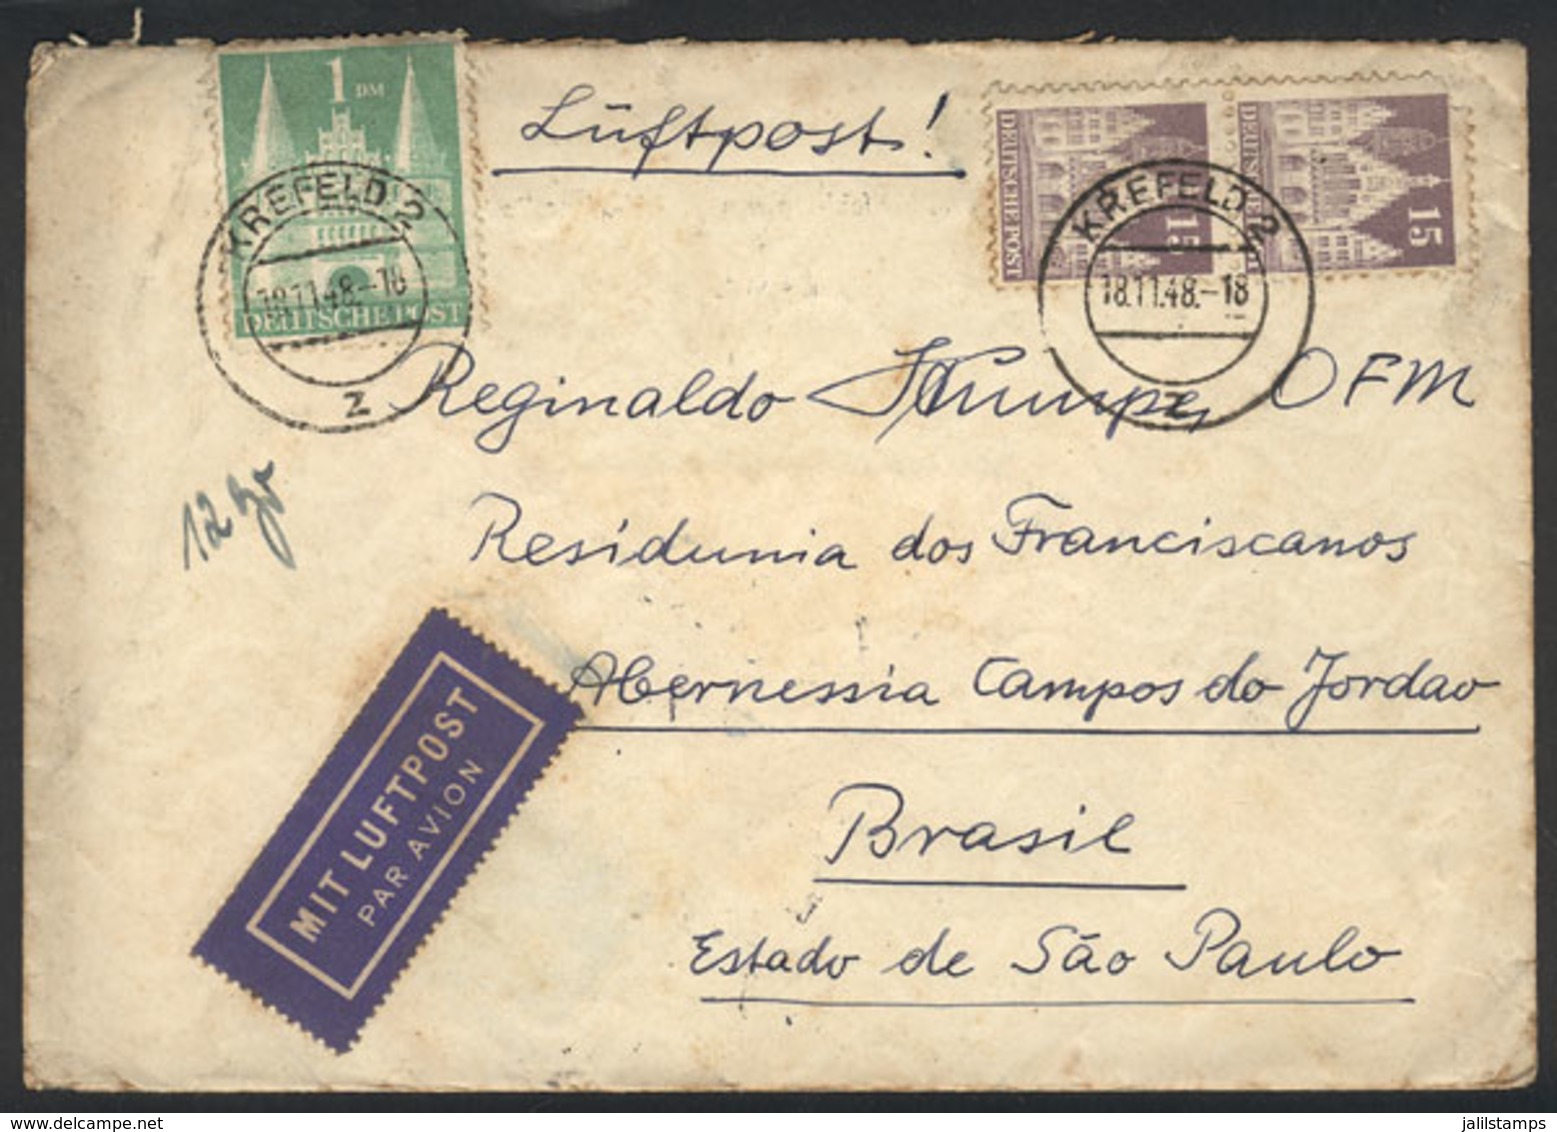 GERMANY: Airmail Cover Sent From Krefeld To Brazil On 18/NO/1948 Franked With 1.30Dm., Interesting! - Préphilatélie